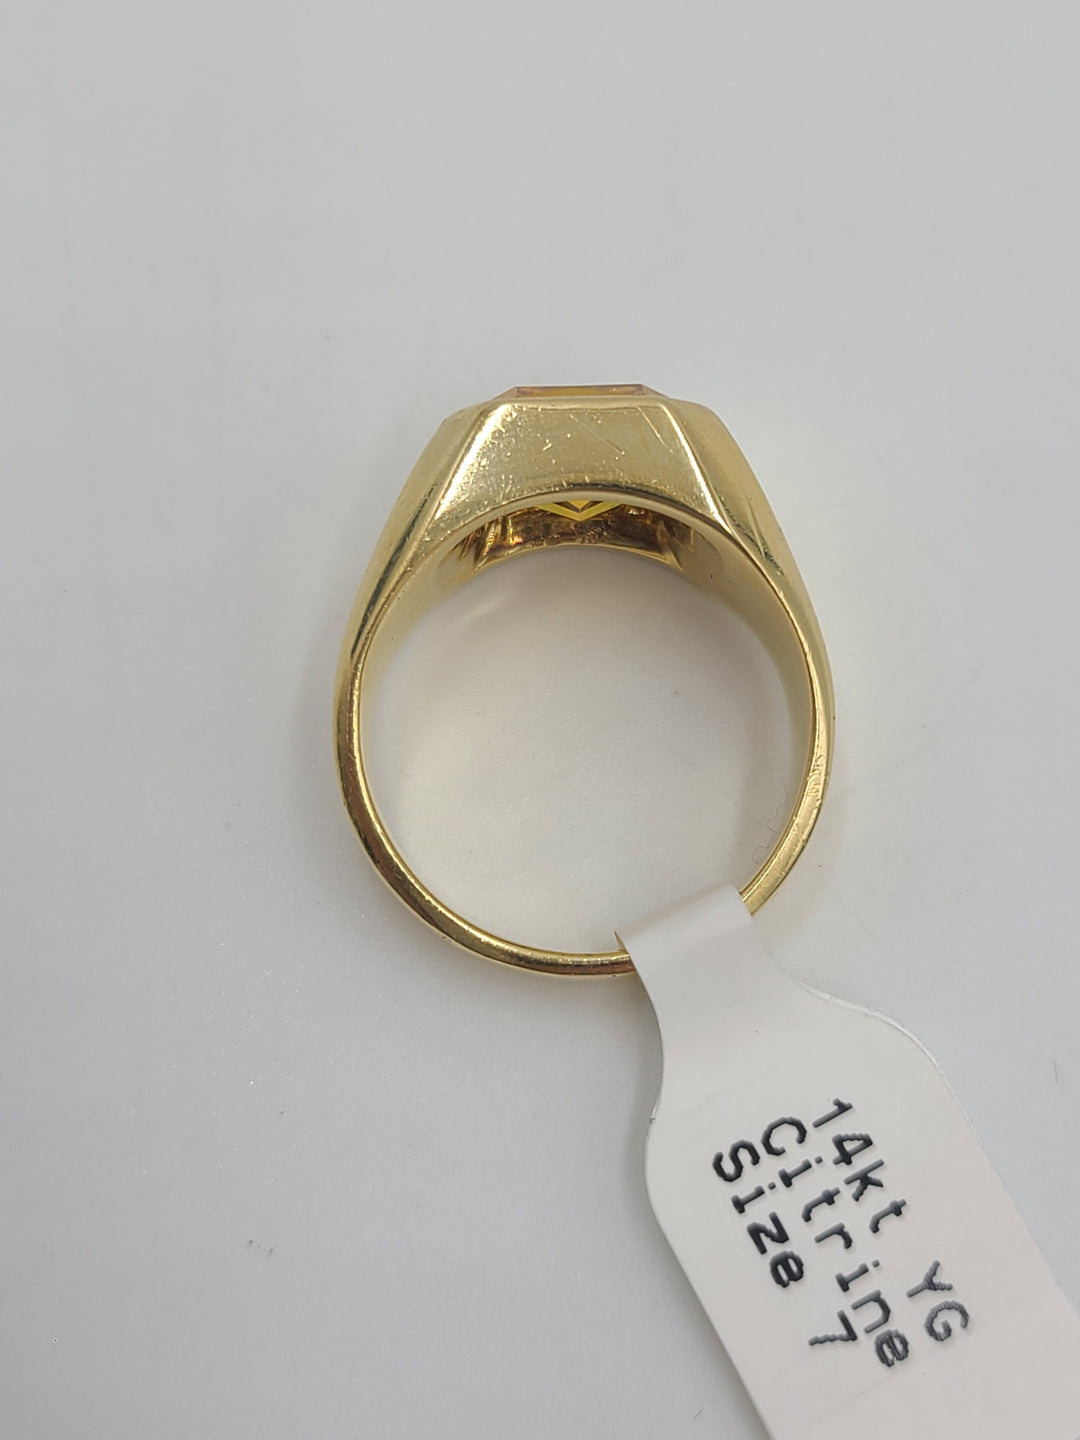 k795 Stylish Men's 14kt Yellow Gold Citrine Ring